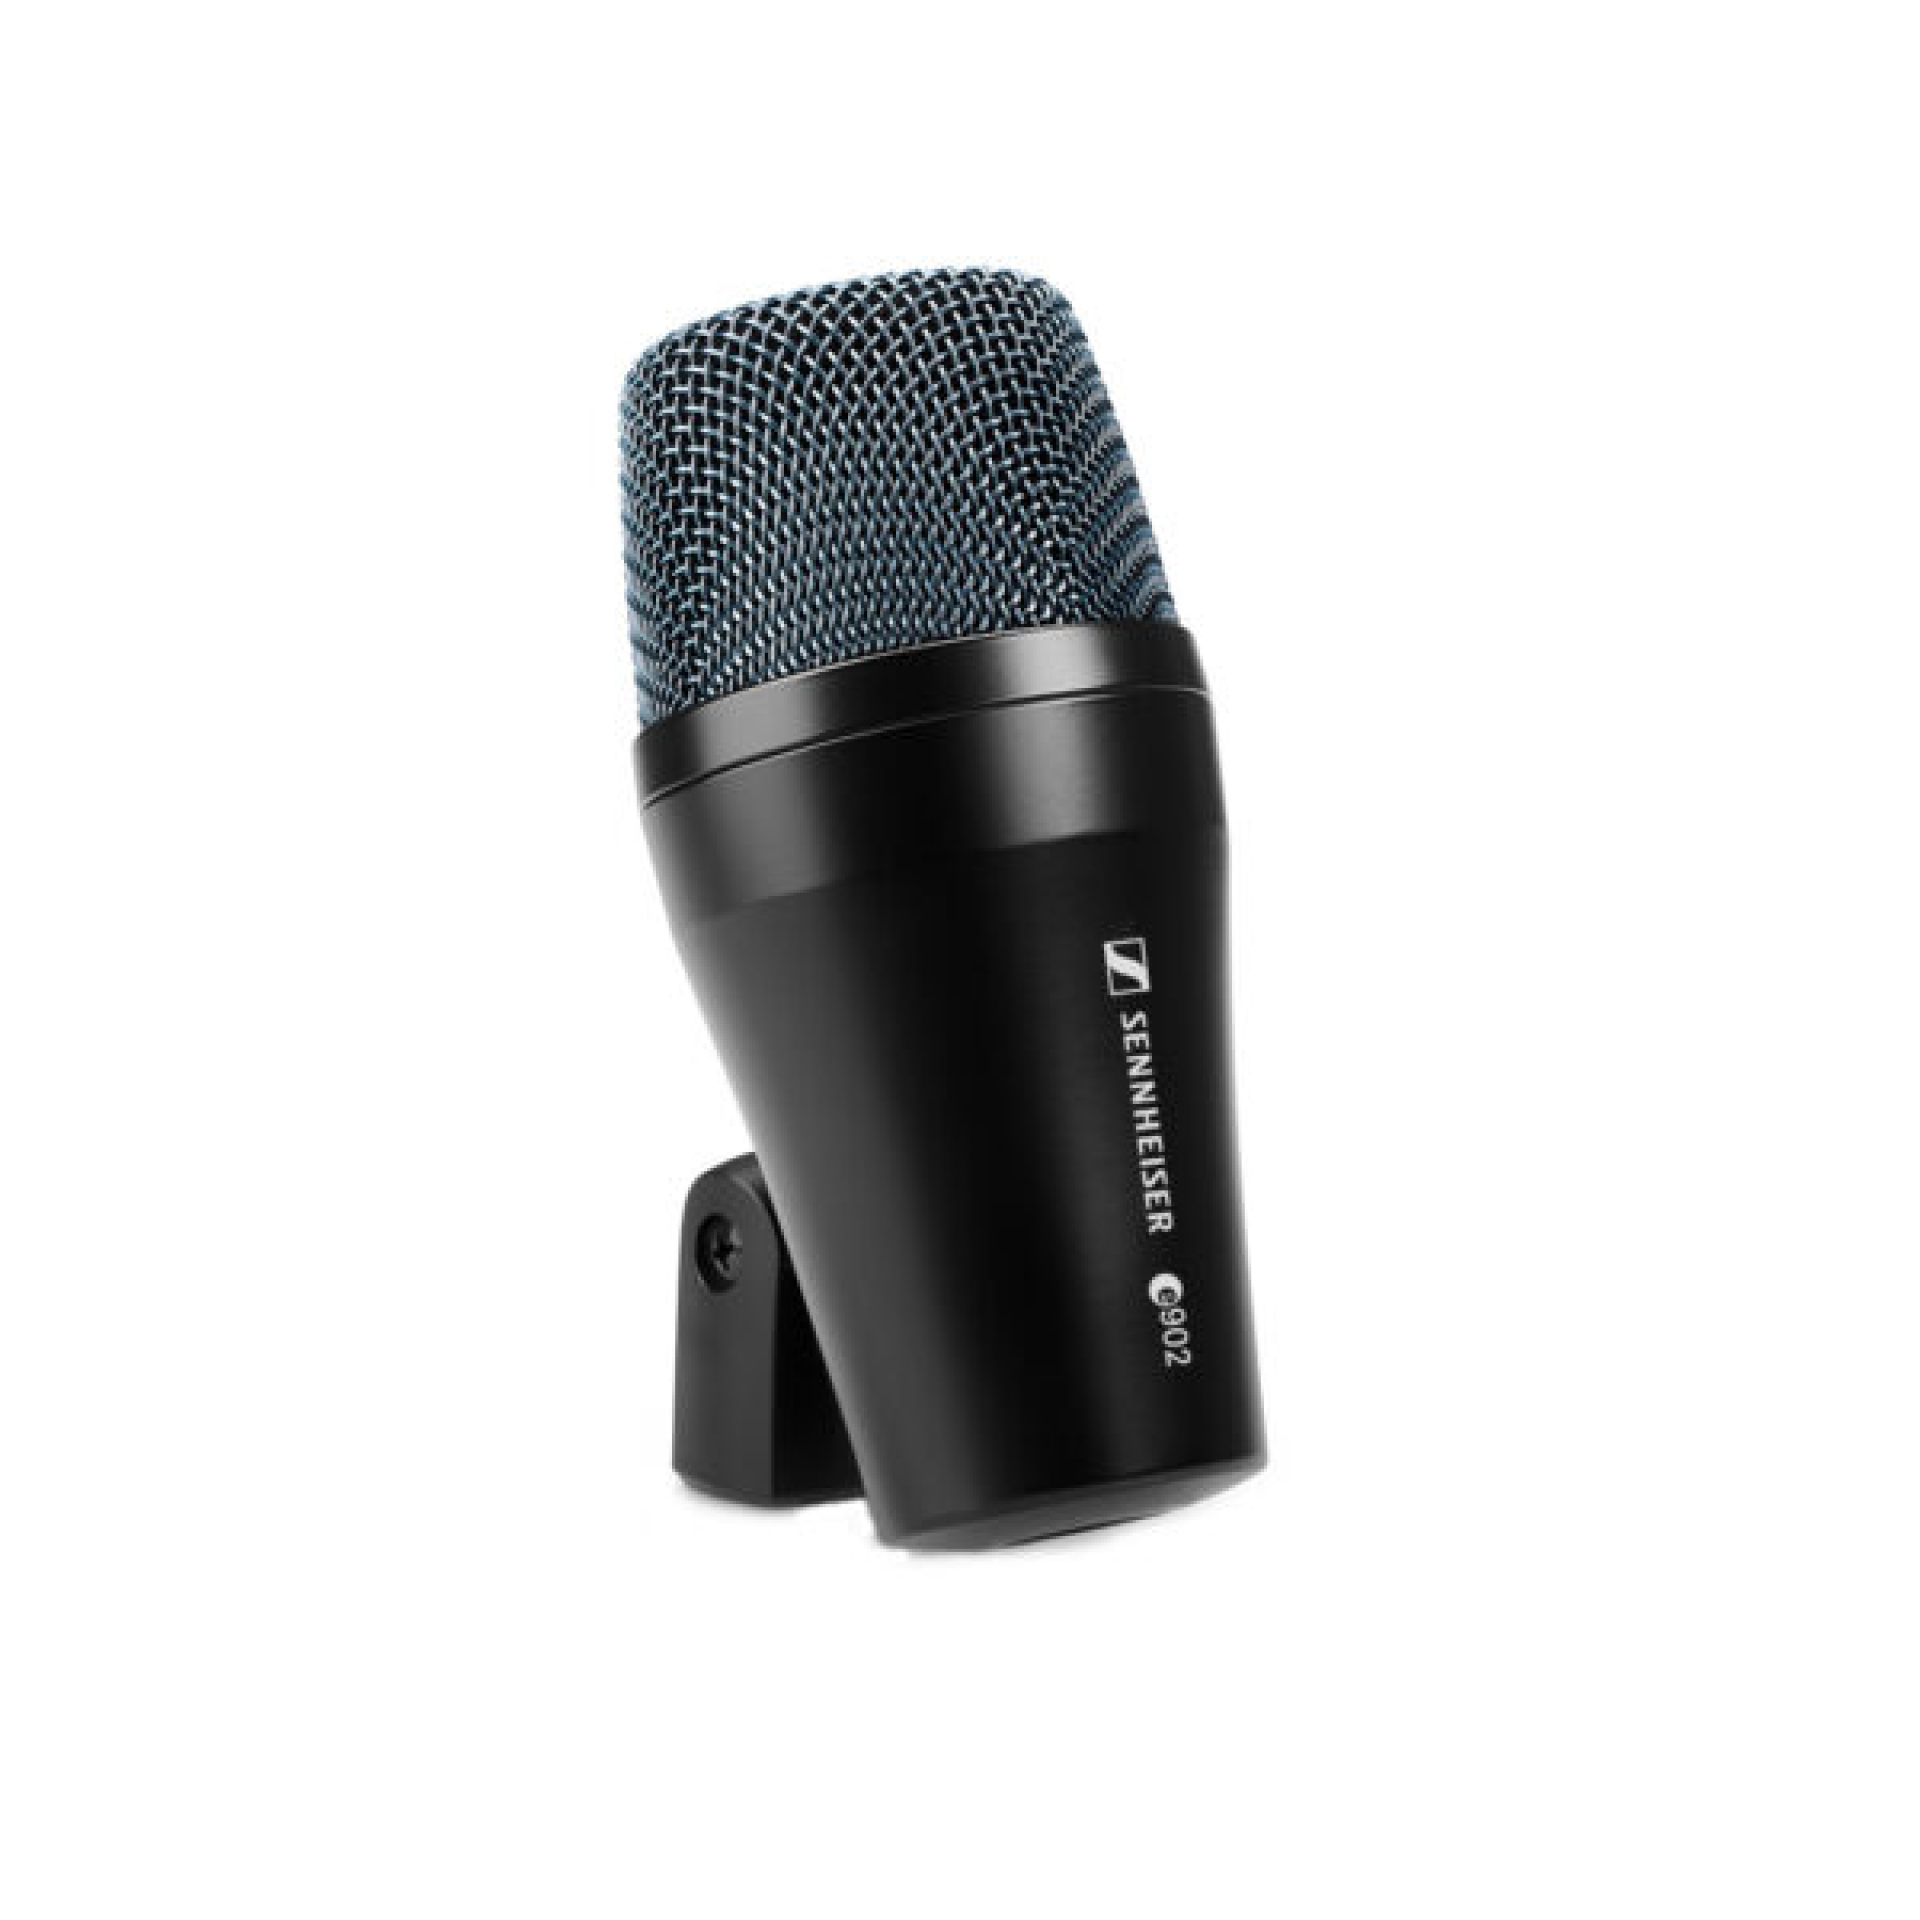 Sennheiser evolution wired microphones - e902